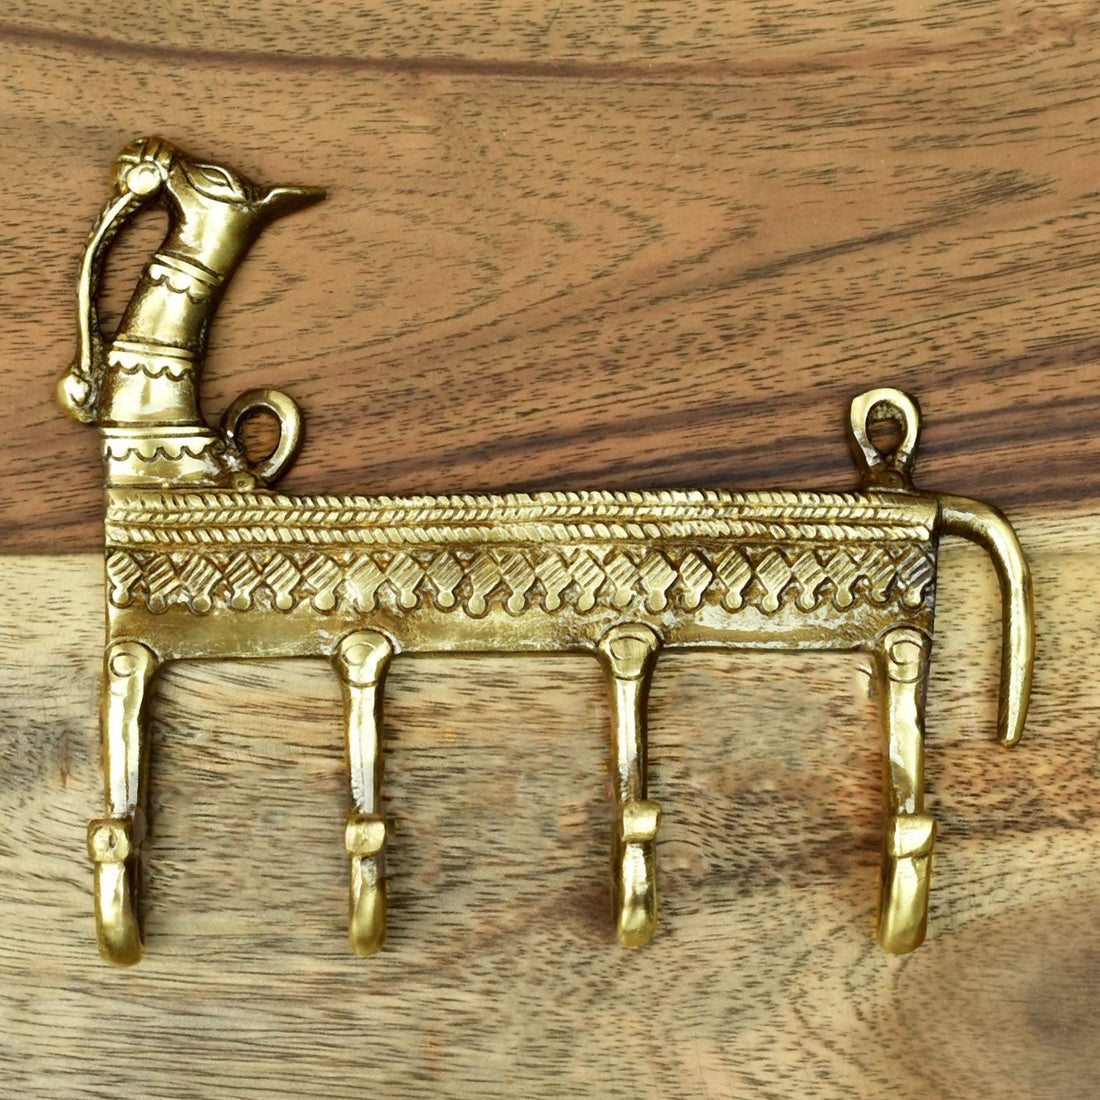 brass key holder for wall